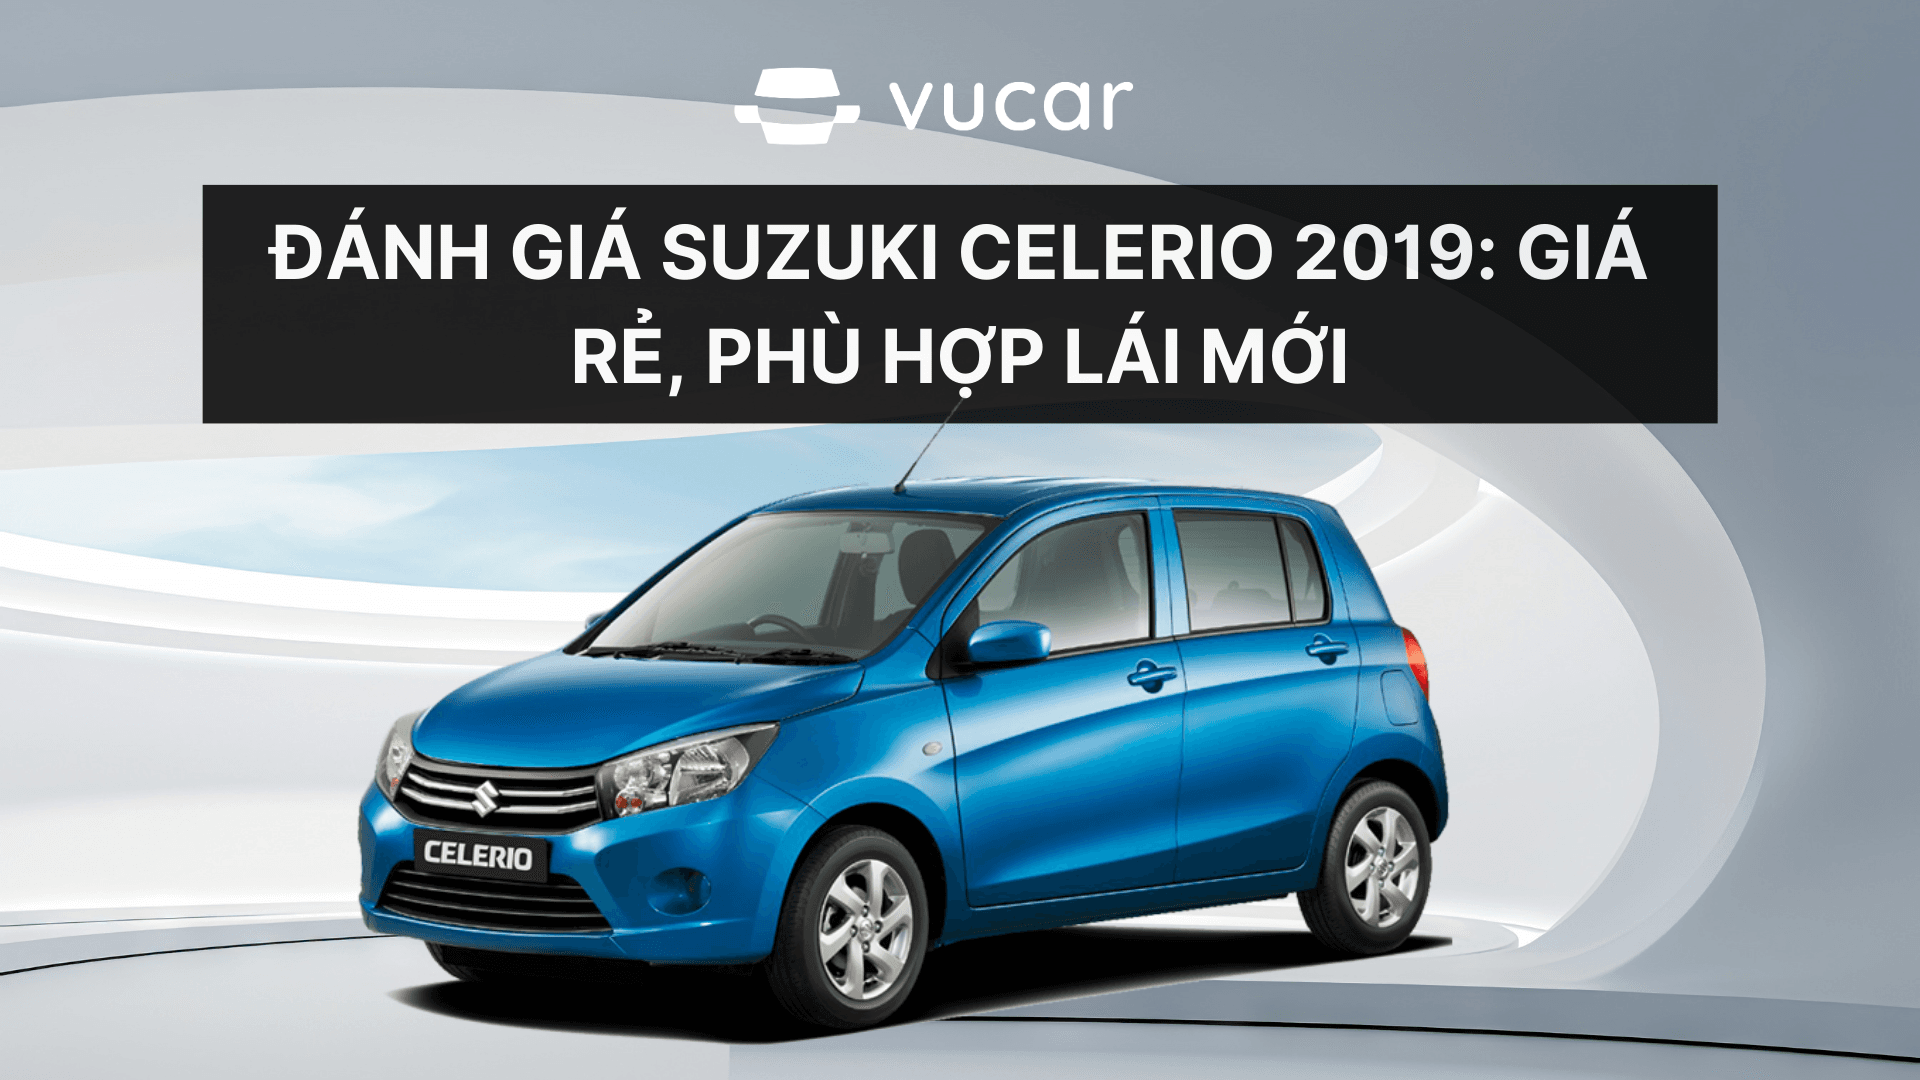 Đánh giá Suzuki Celerio 2019: Giá rẻ, phù hợp lái mới